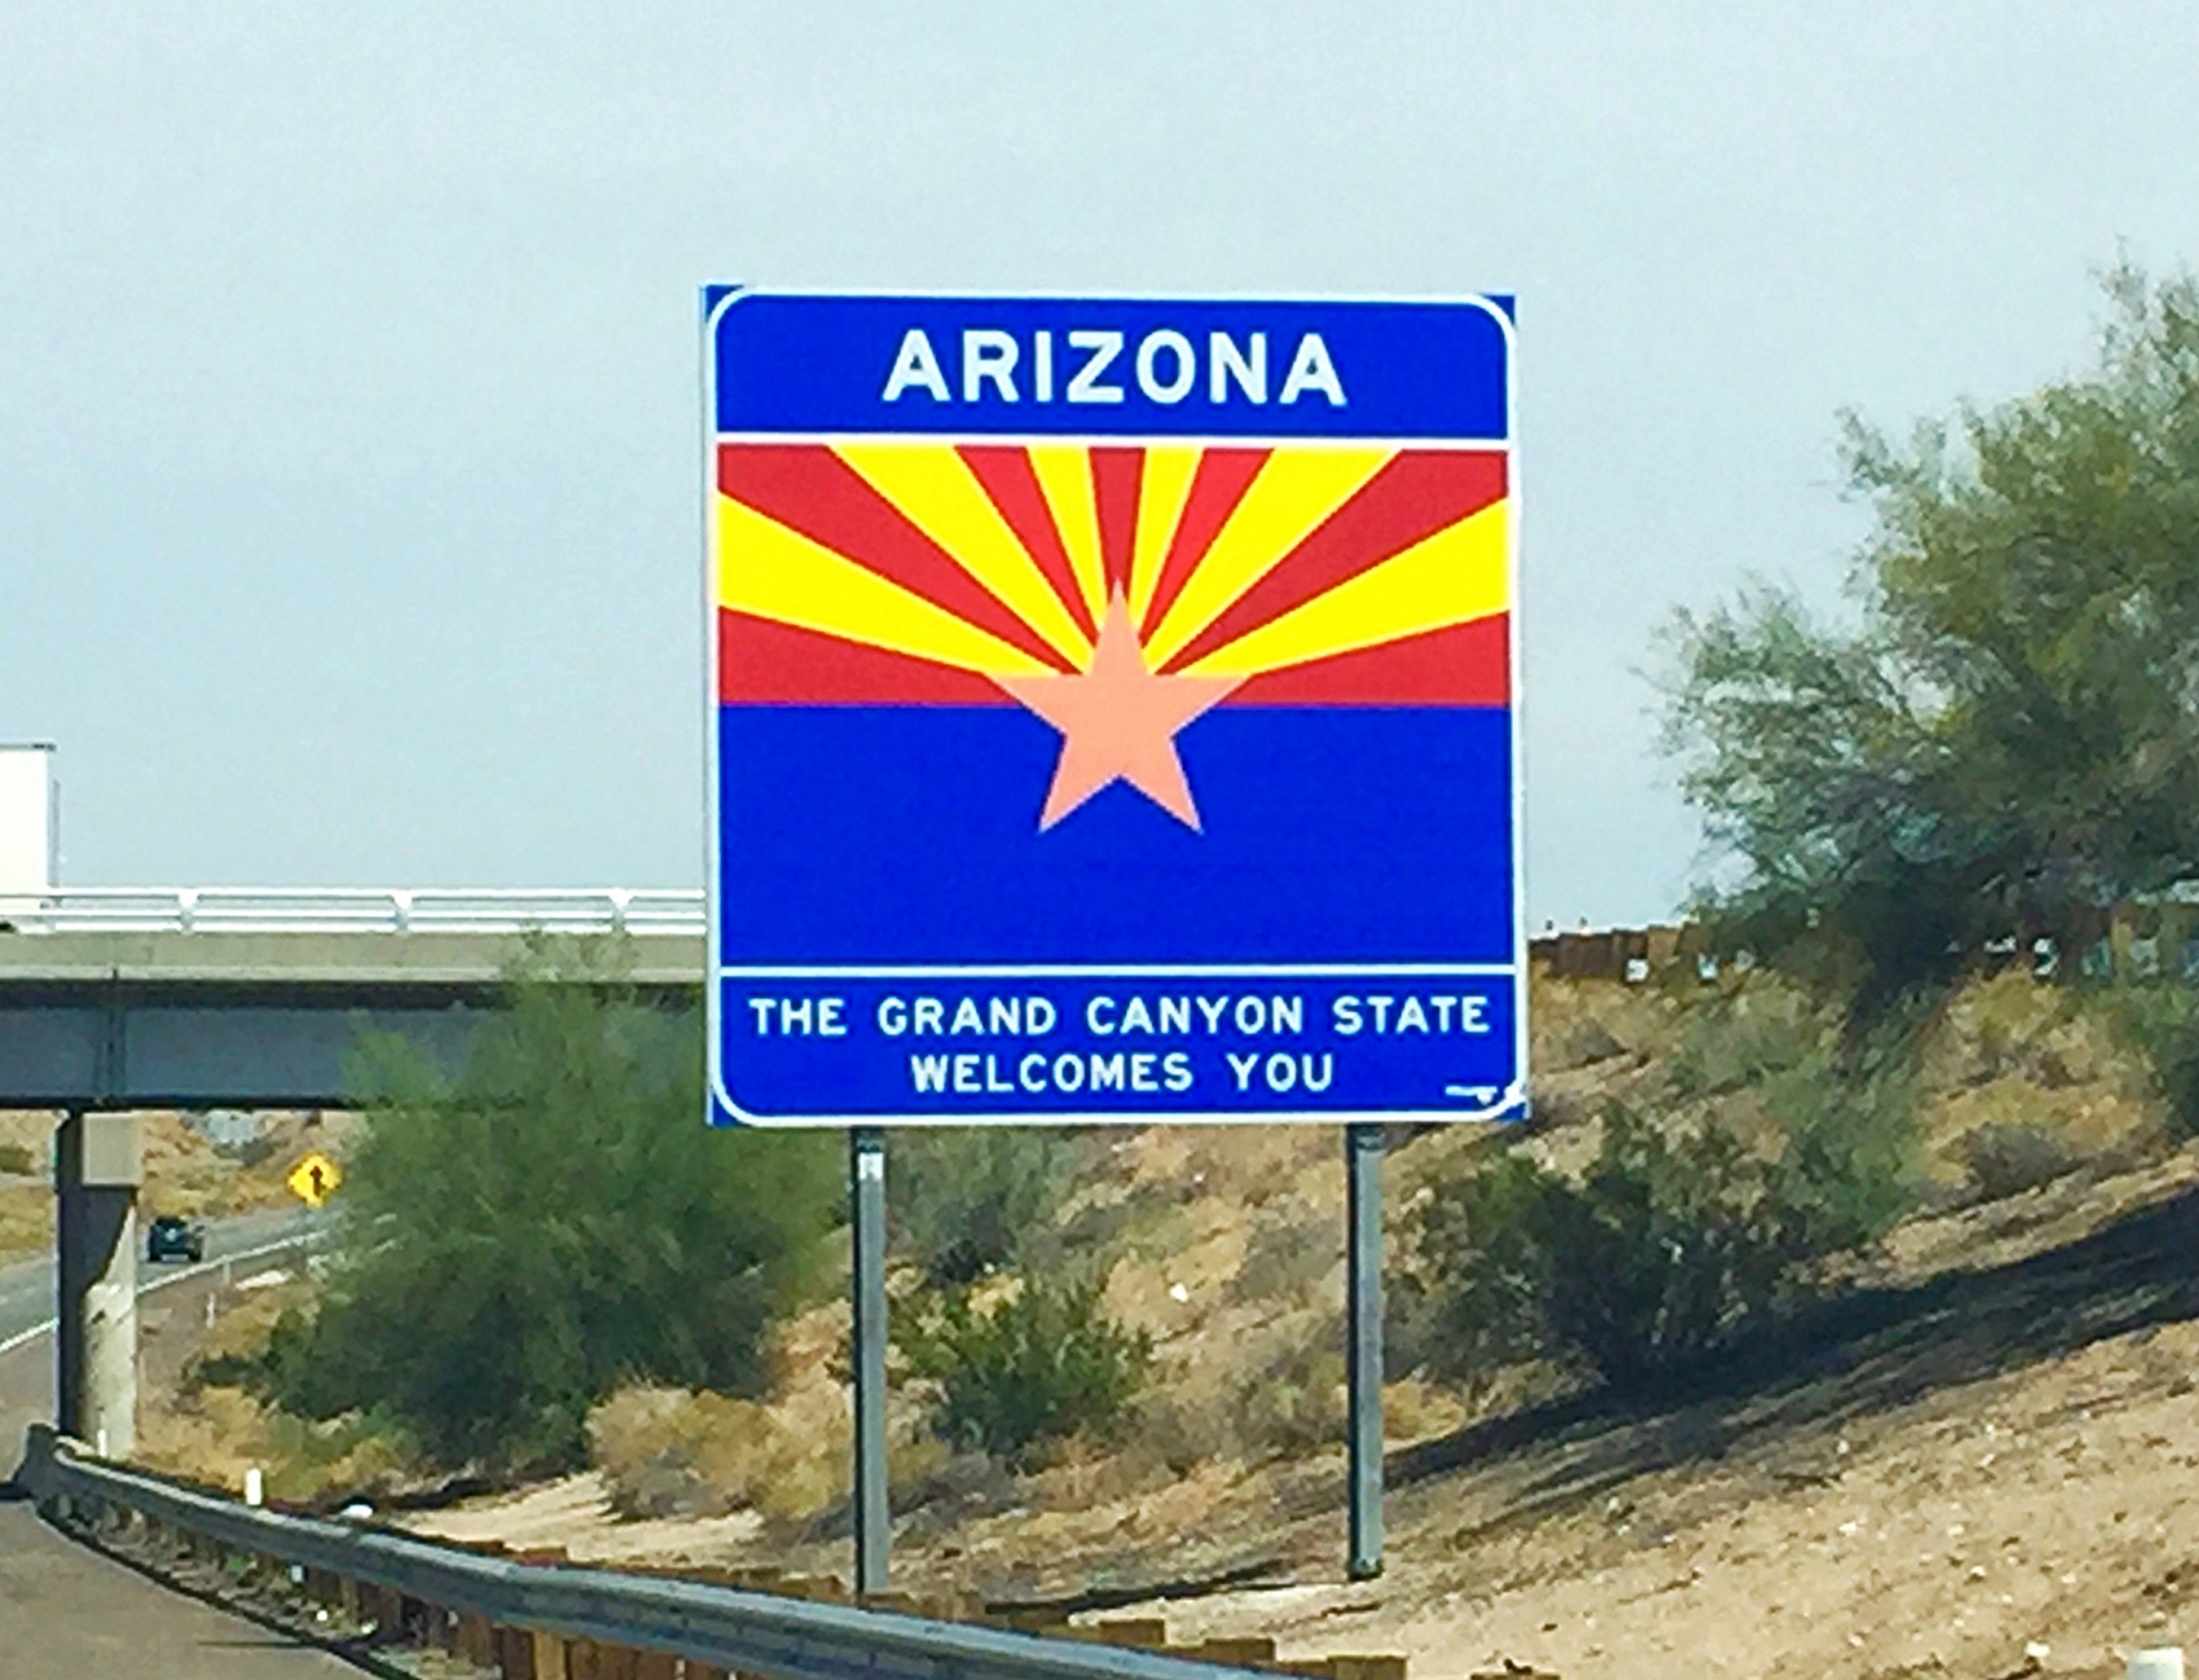 Crossing the Arizona border